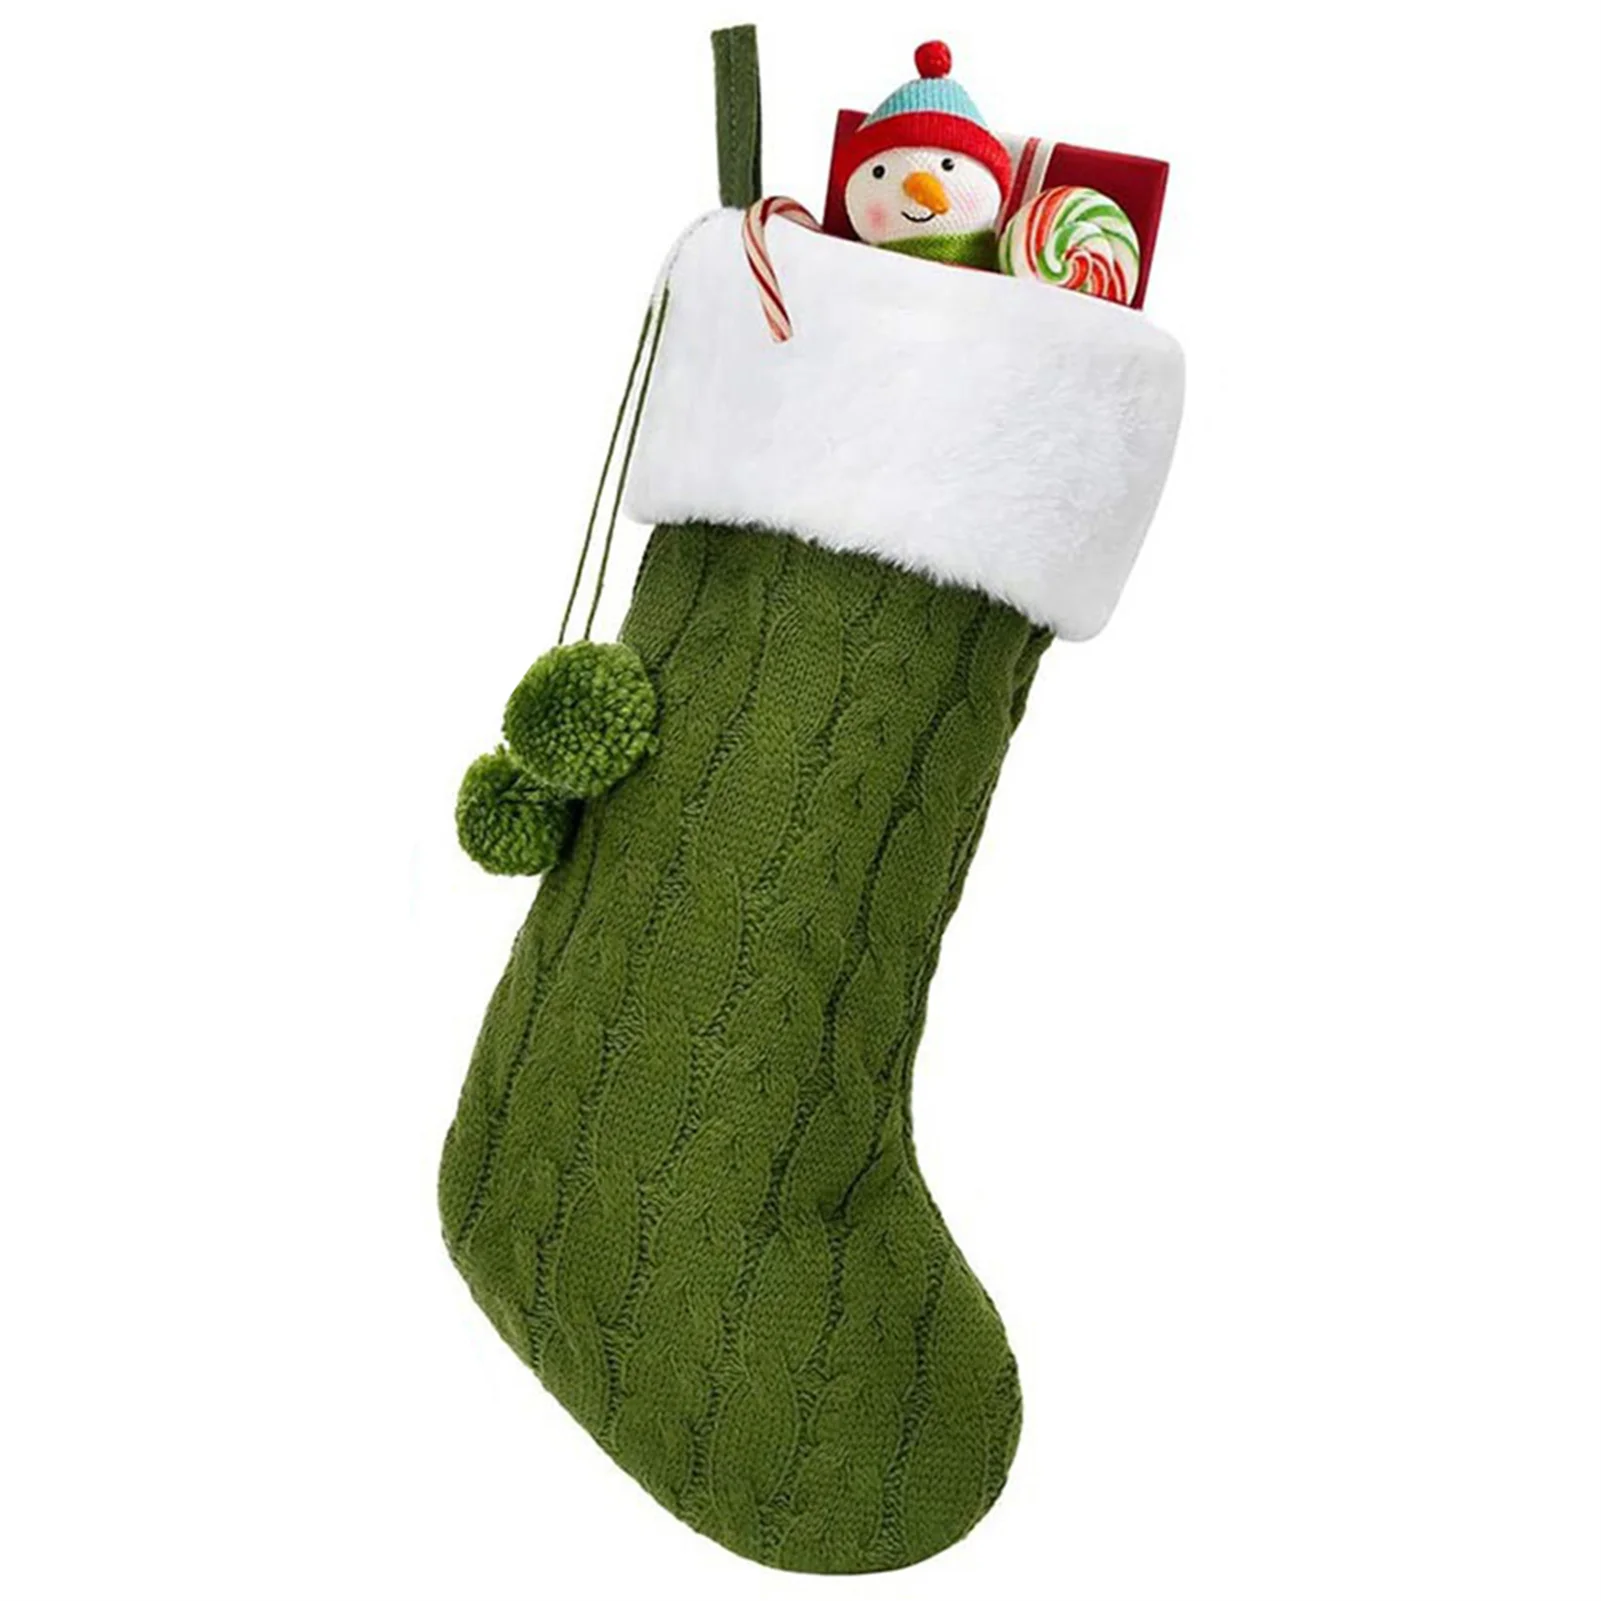 

Merry Christmas Decorative Stocking Reusable Decorative Stockings for Holding Christmas Gifts Candy